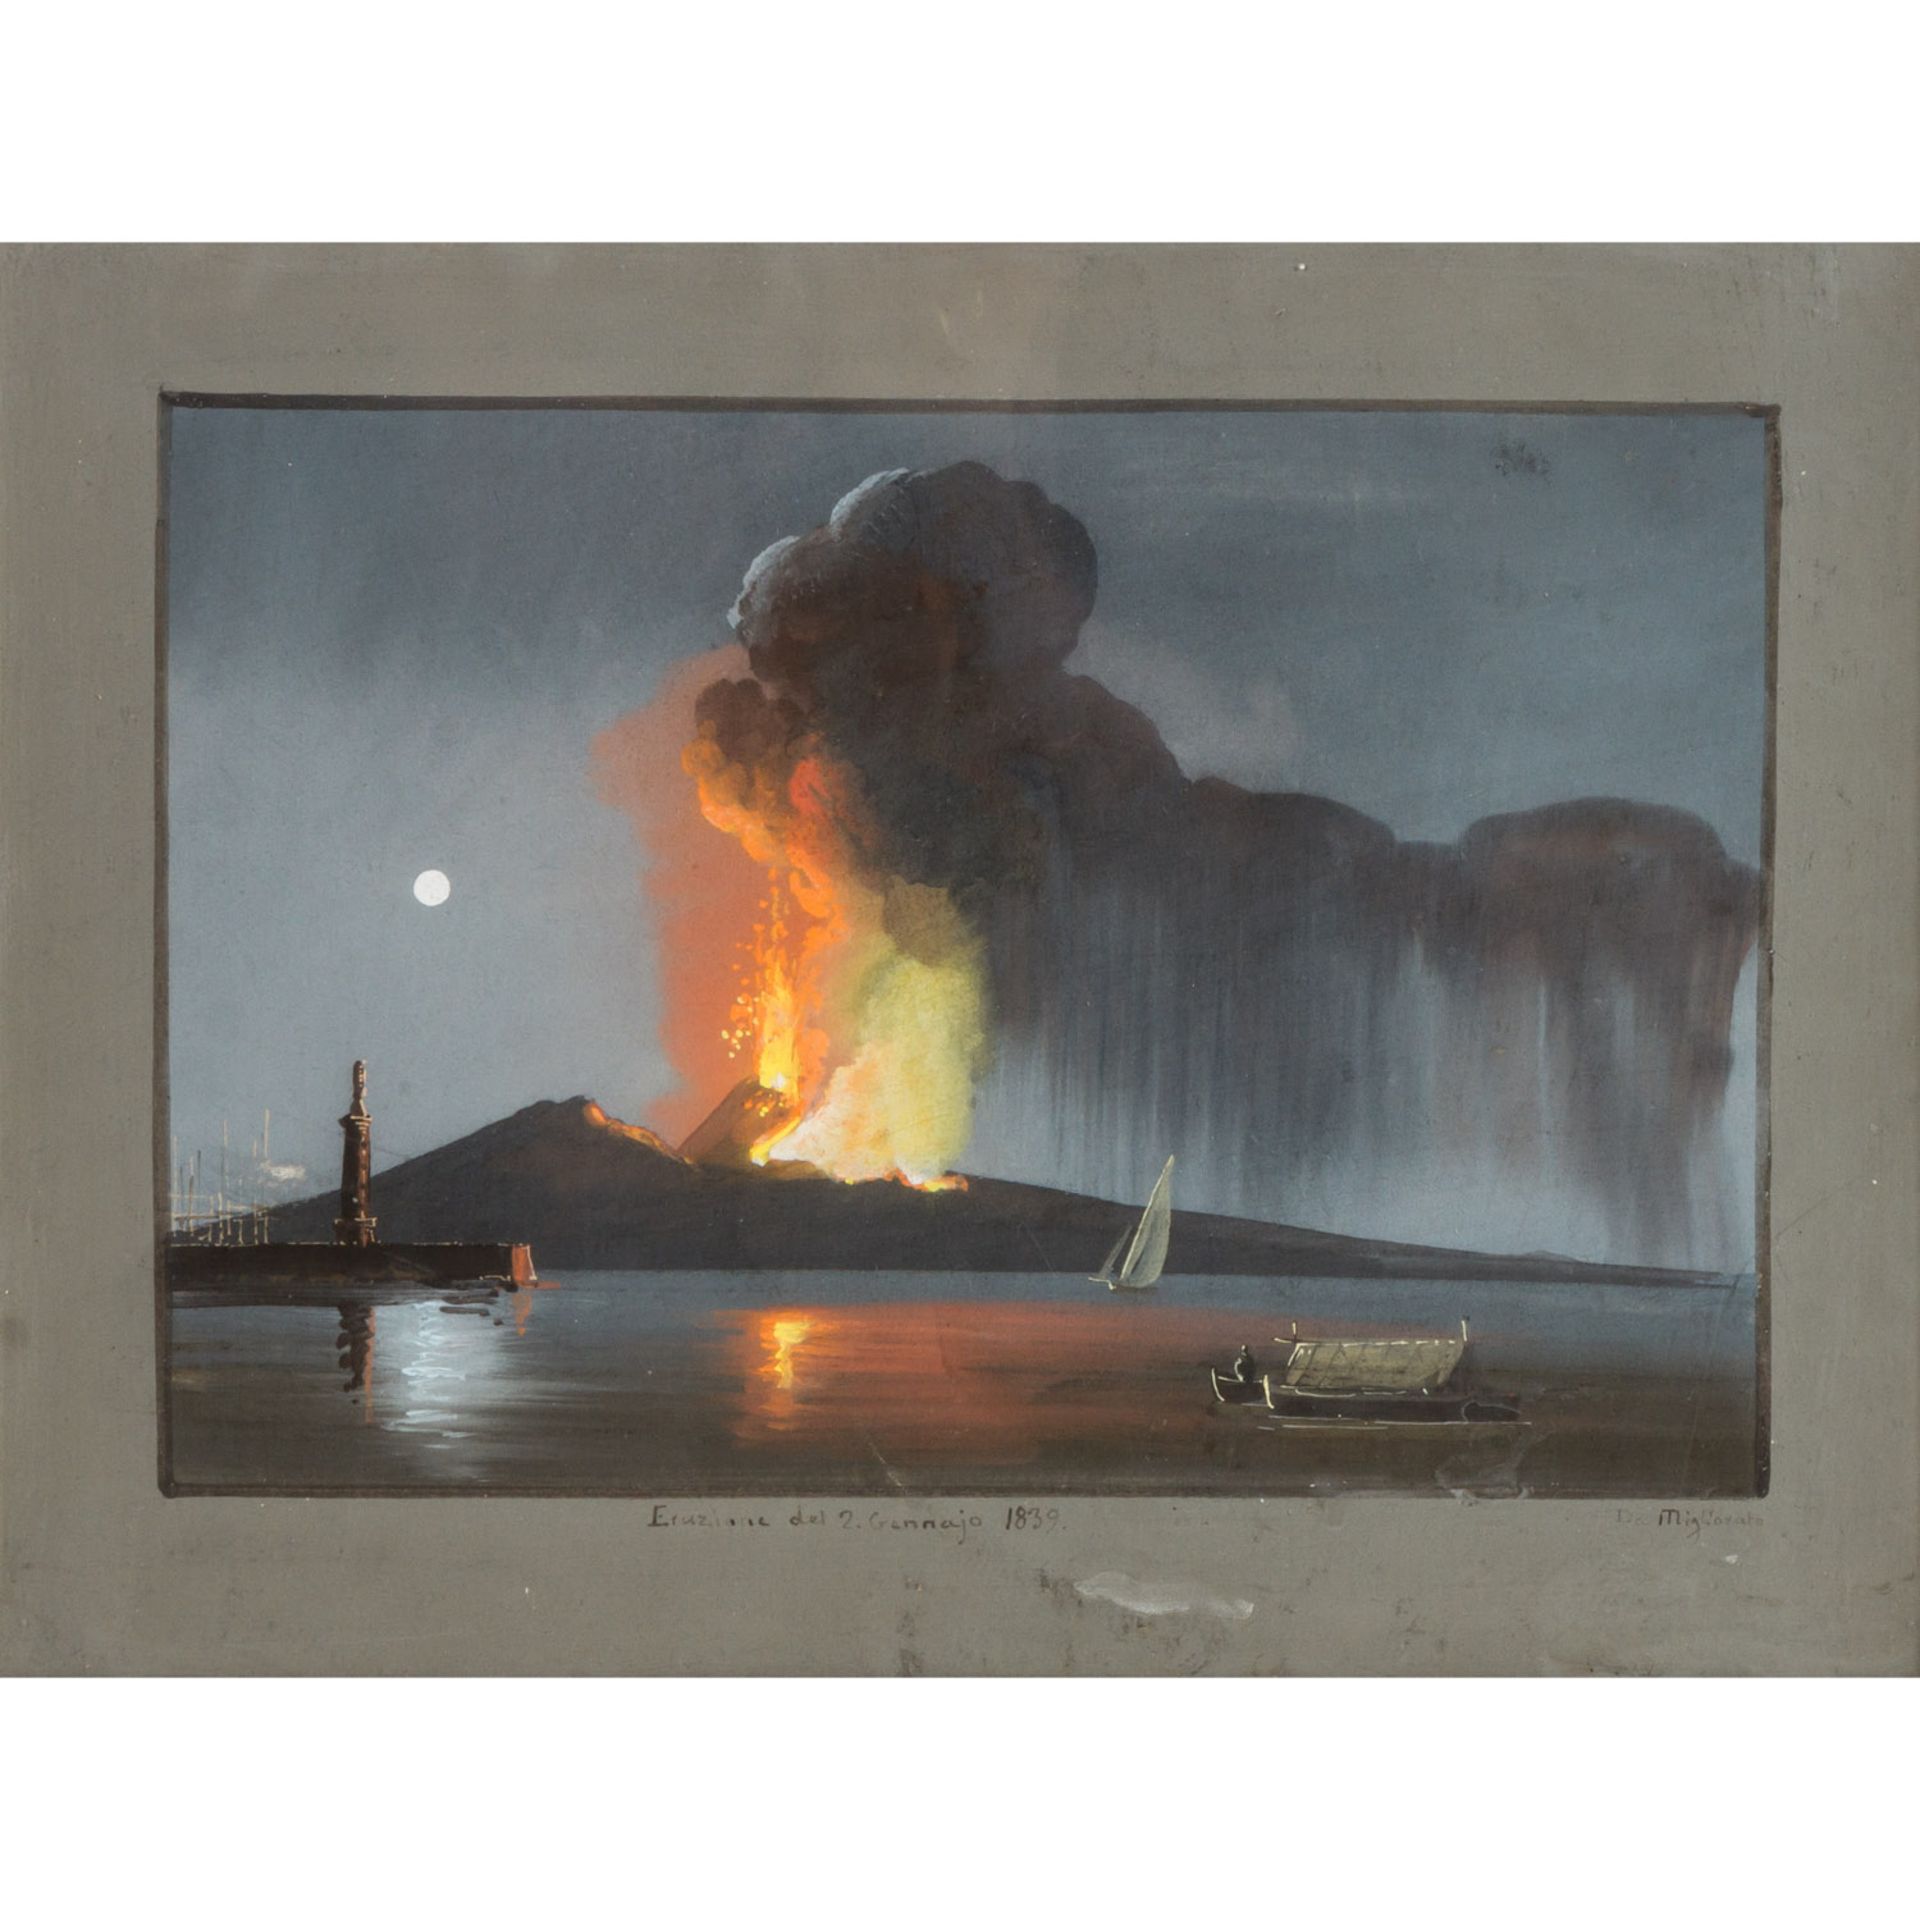 MIGLIORATO, D. (Künstler 19. Jh.), "Eruzione dal 2. Gennajo 1839",Neapel, Ausbruch de